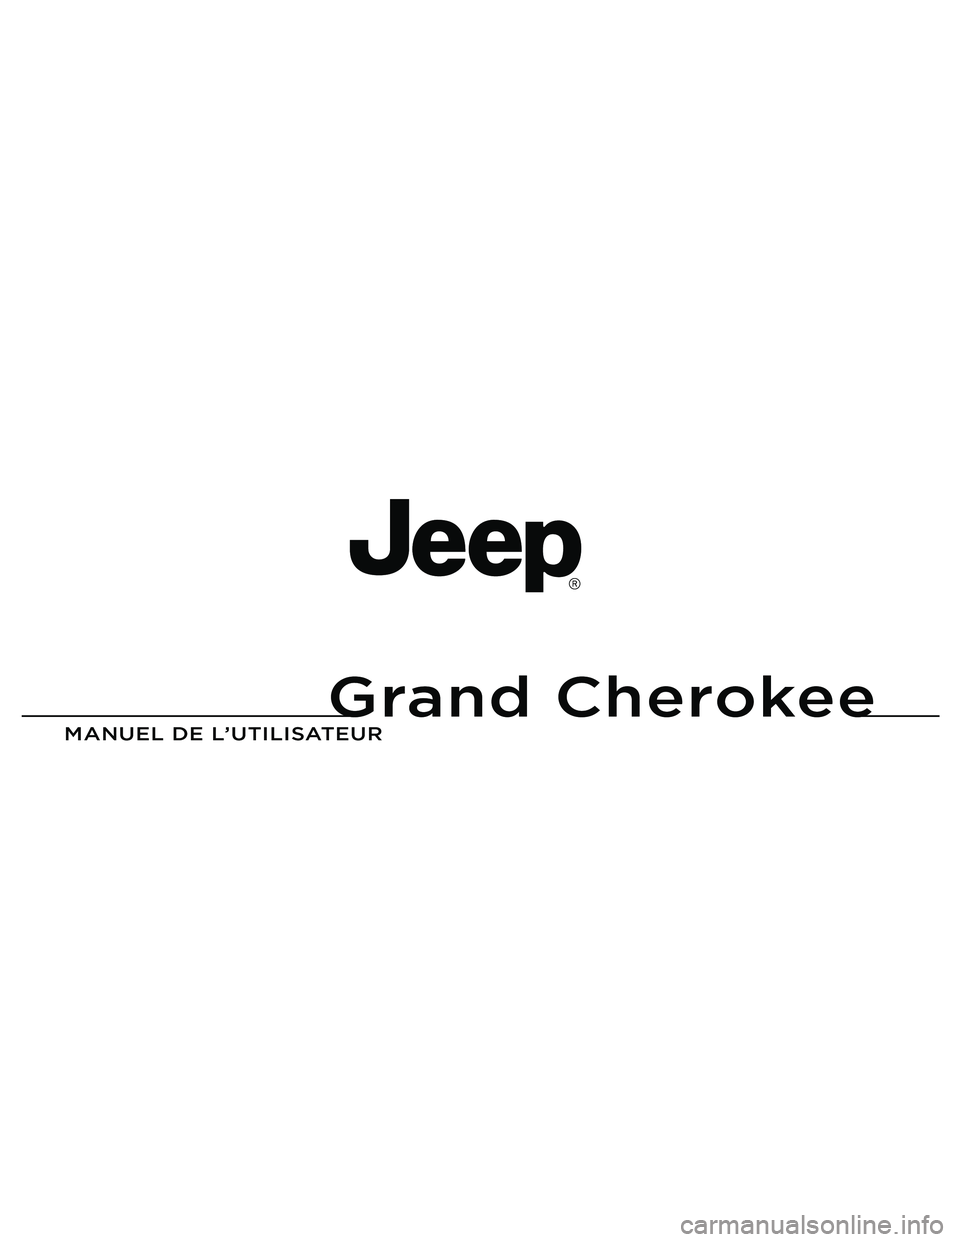 JEEP GRAND CHEROKEE 2015  Notice dentretien (in French) Grand Cherokee
MANUEL DE L’U\fILISA\fEUR 